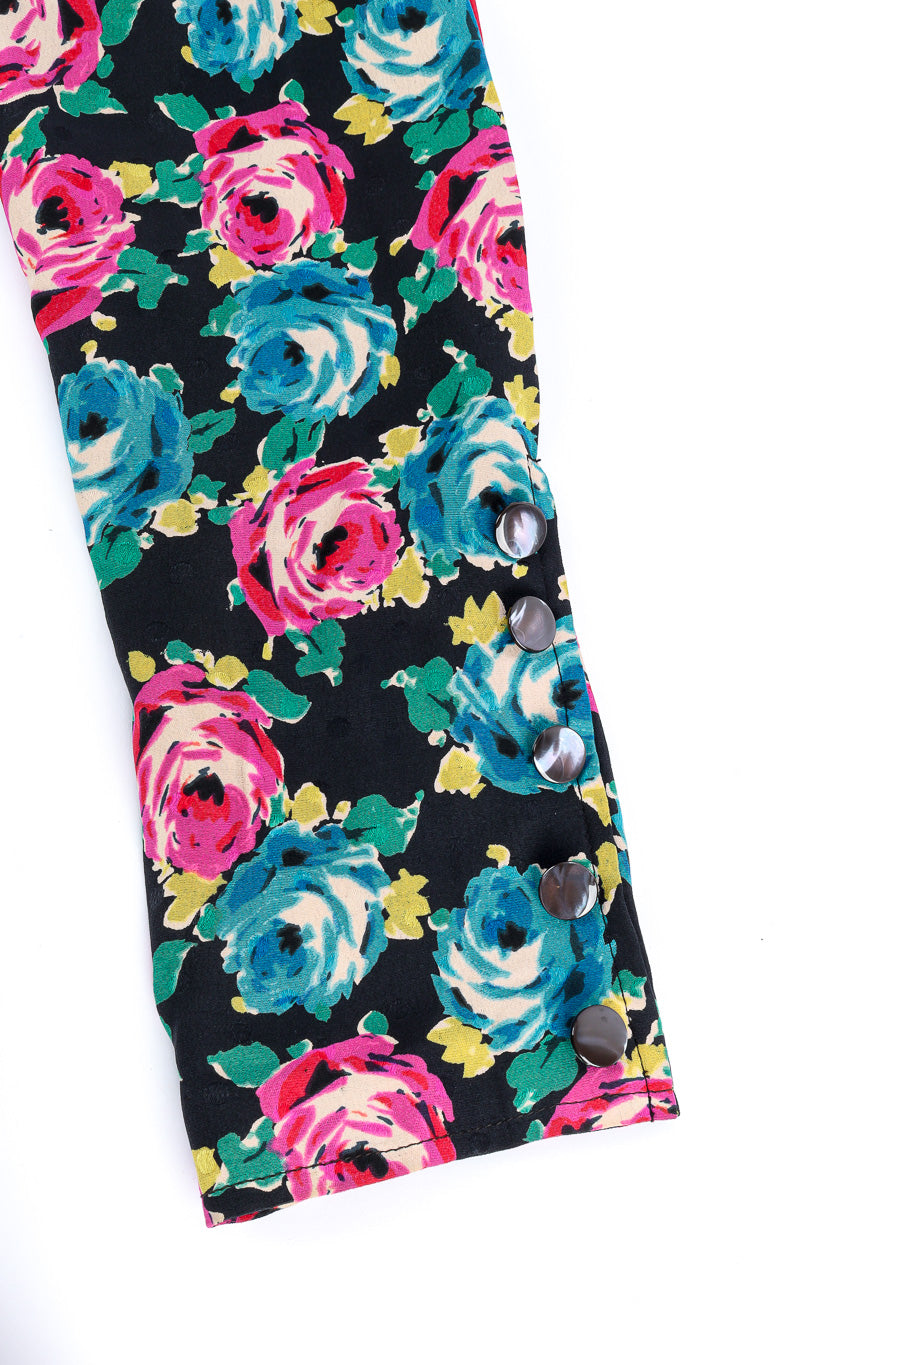 Emanuele Ungaro rose print silk dress button detail @recessla